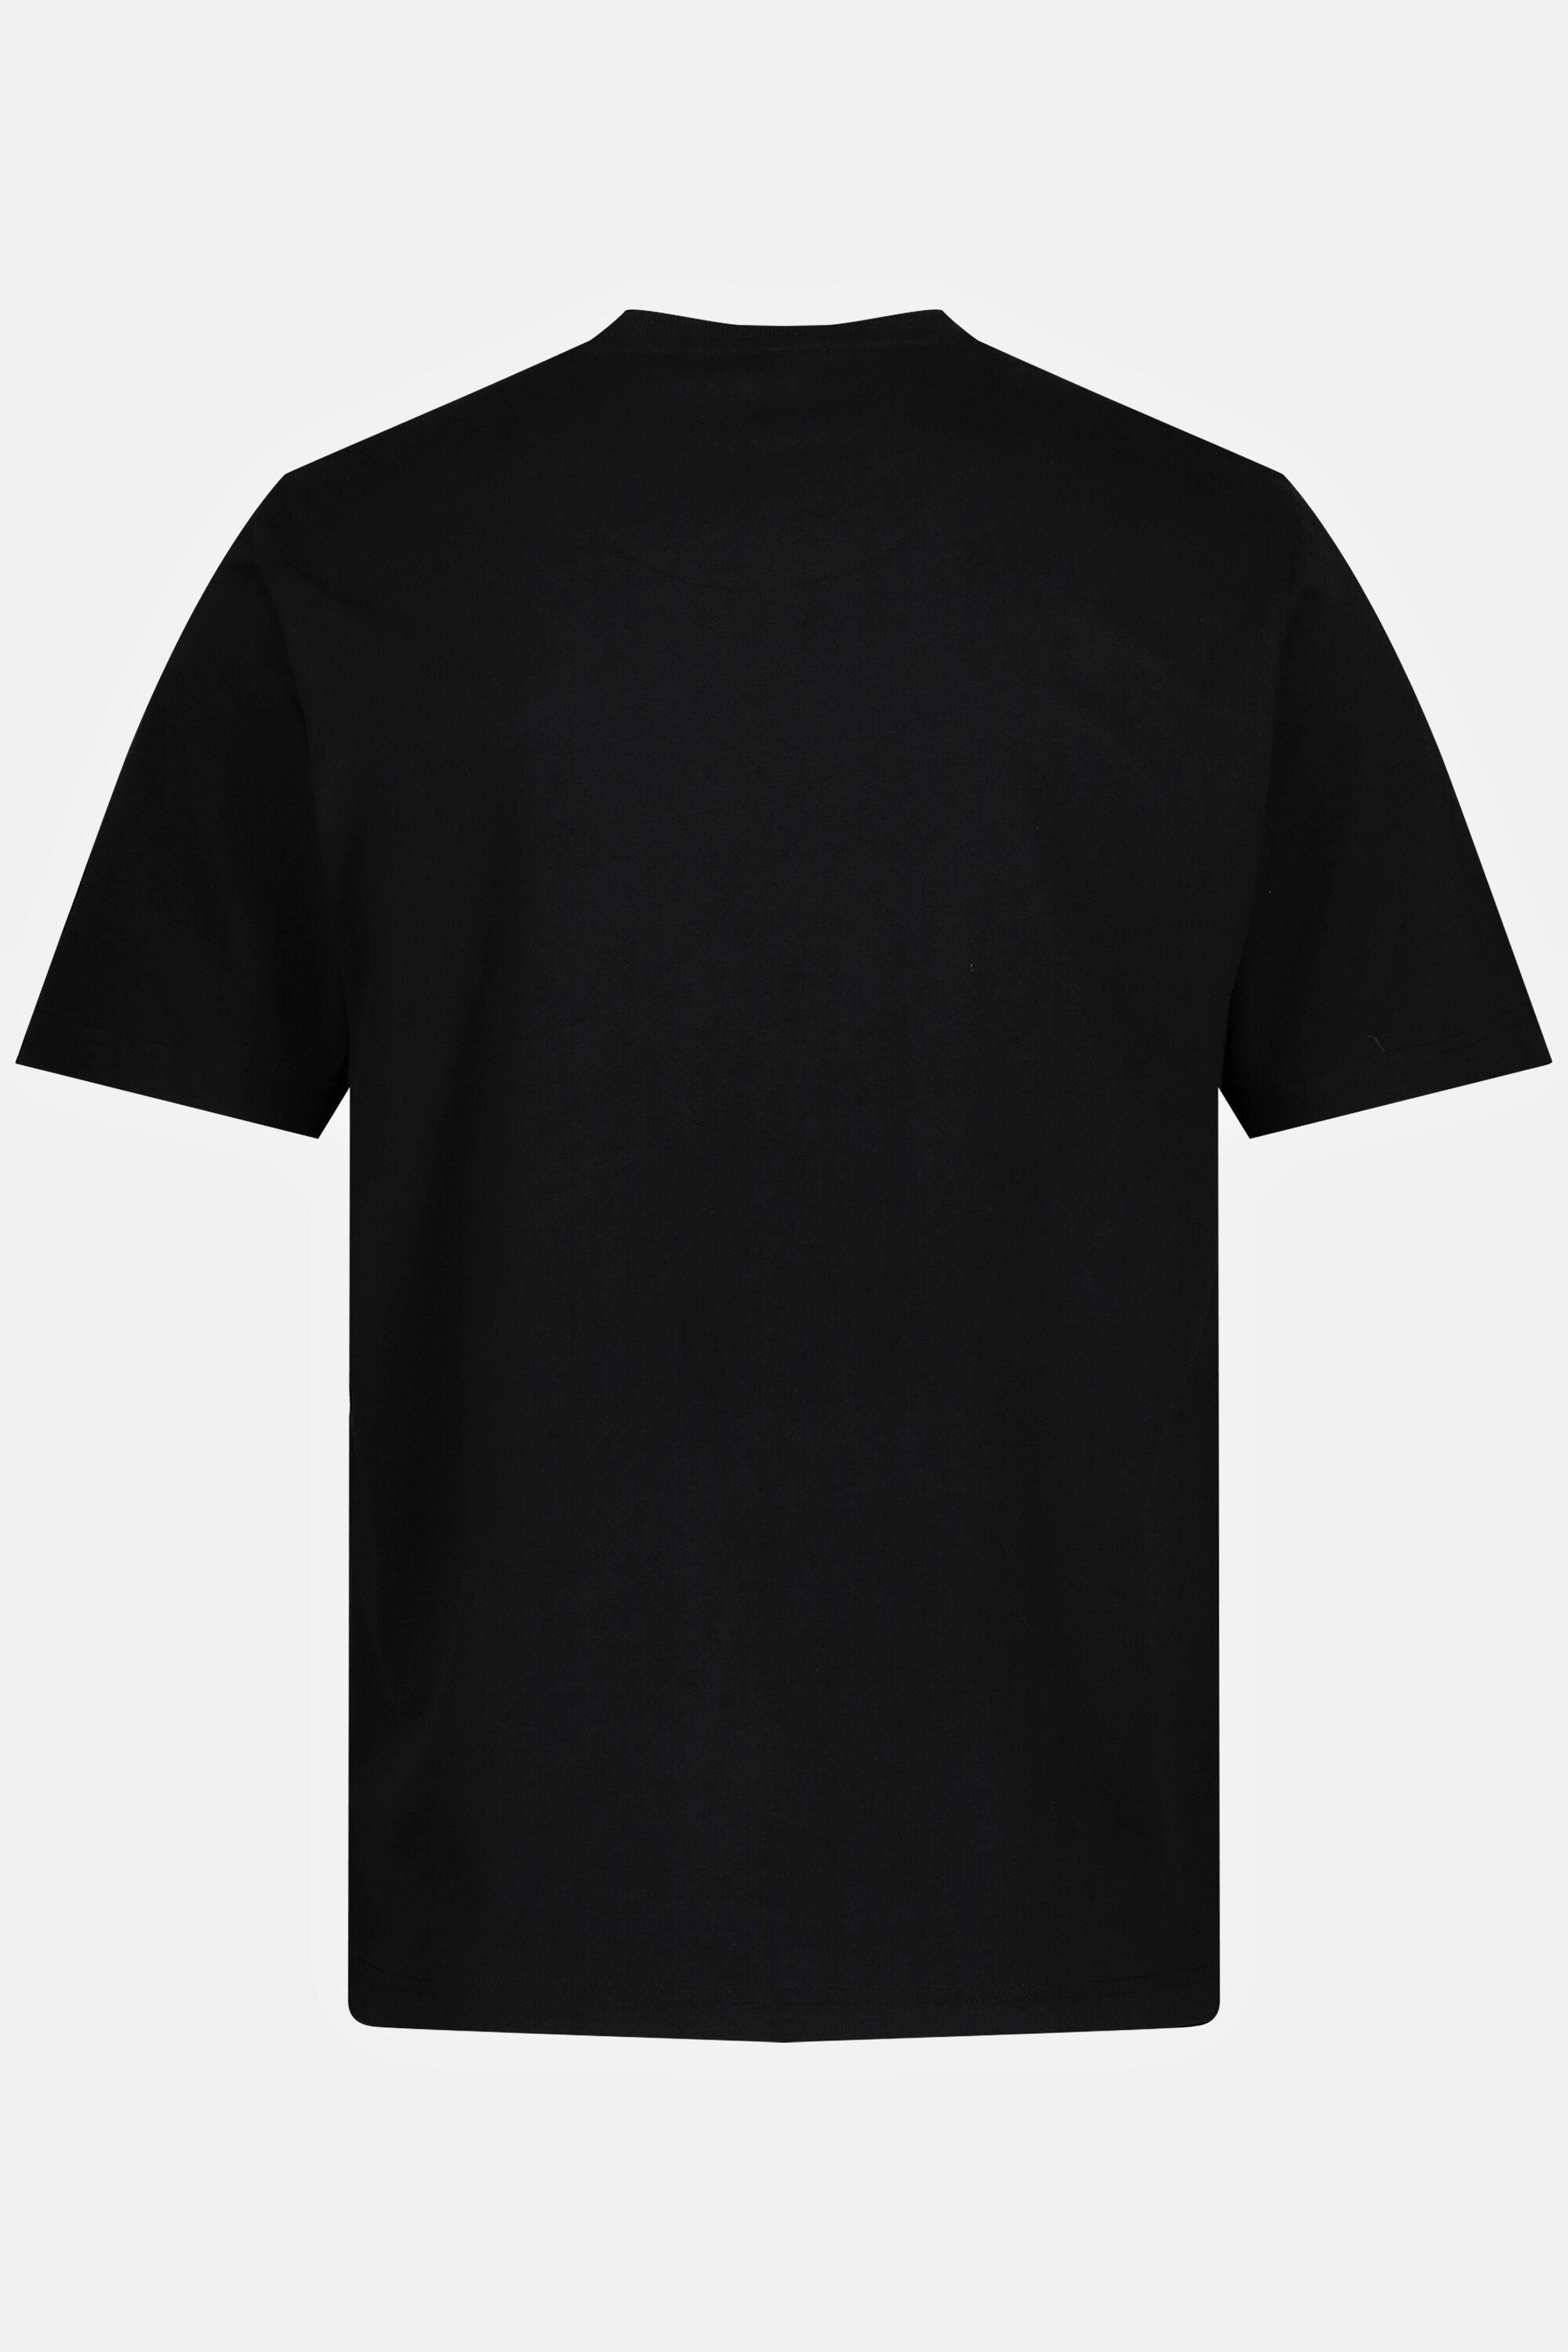 Blackcomb T-Shirt JP1880 T-Shirt Print Skiwear Halbarm